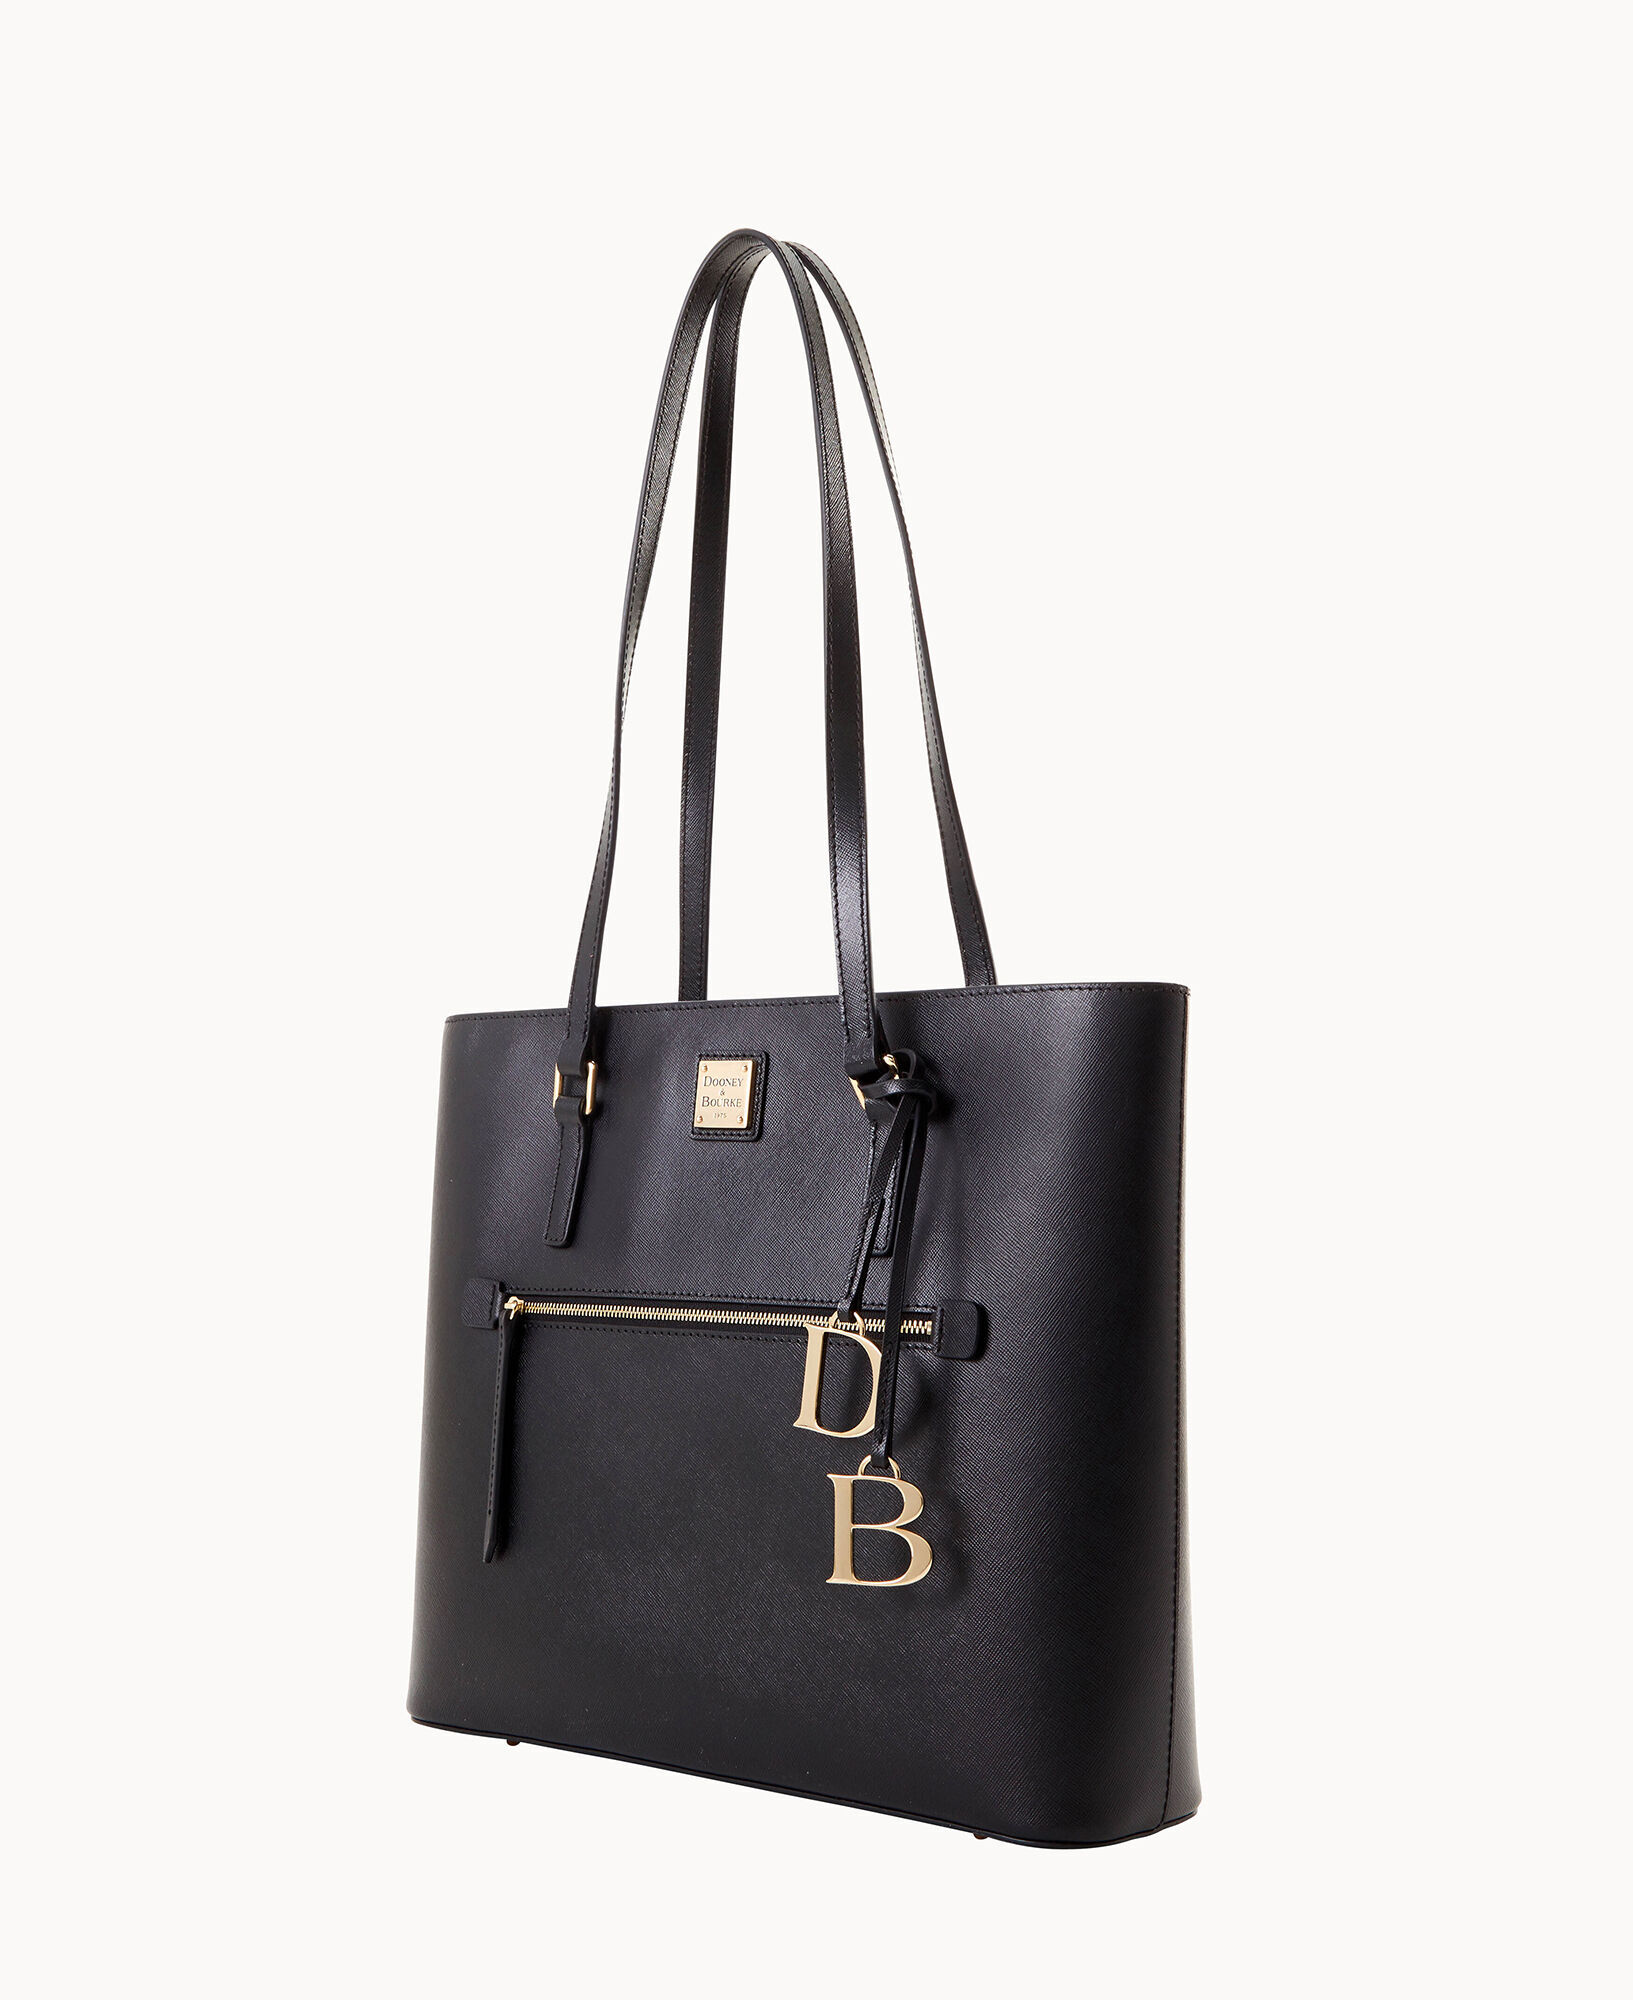 Dooney & Bourke Saffiano Shopper - ShopStyle Tote Bags